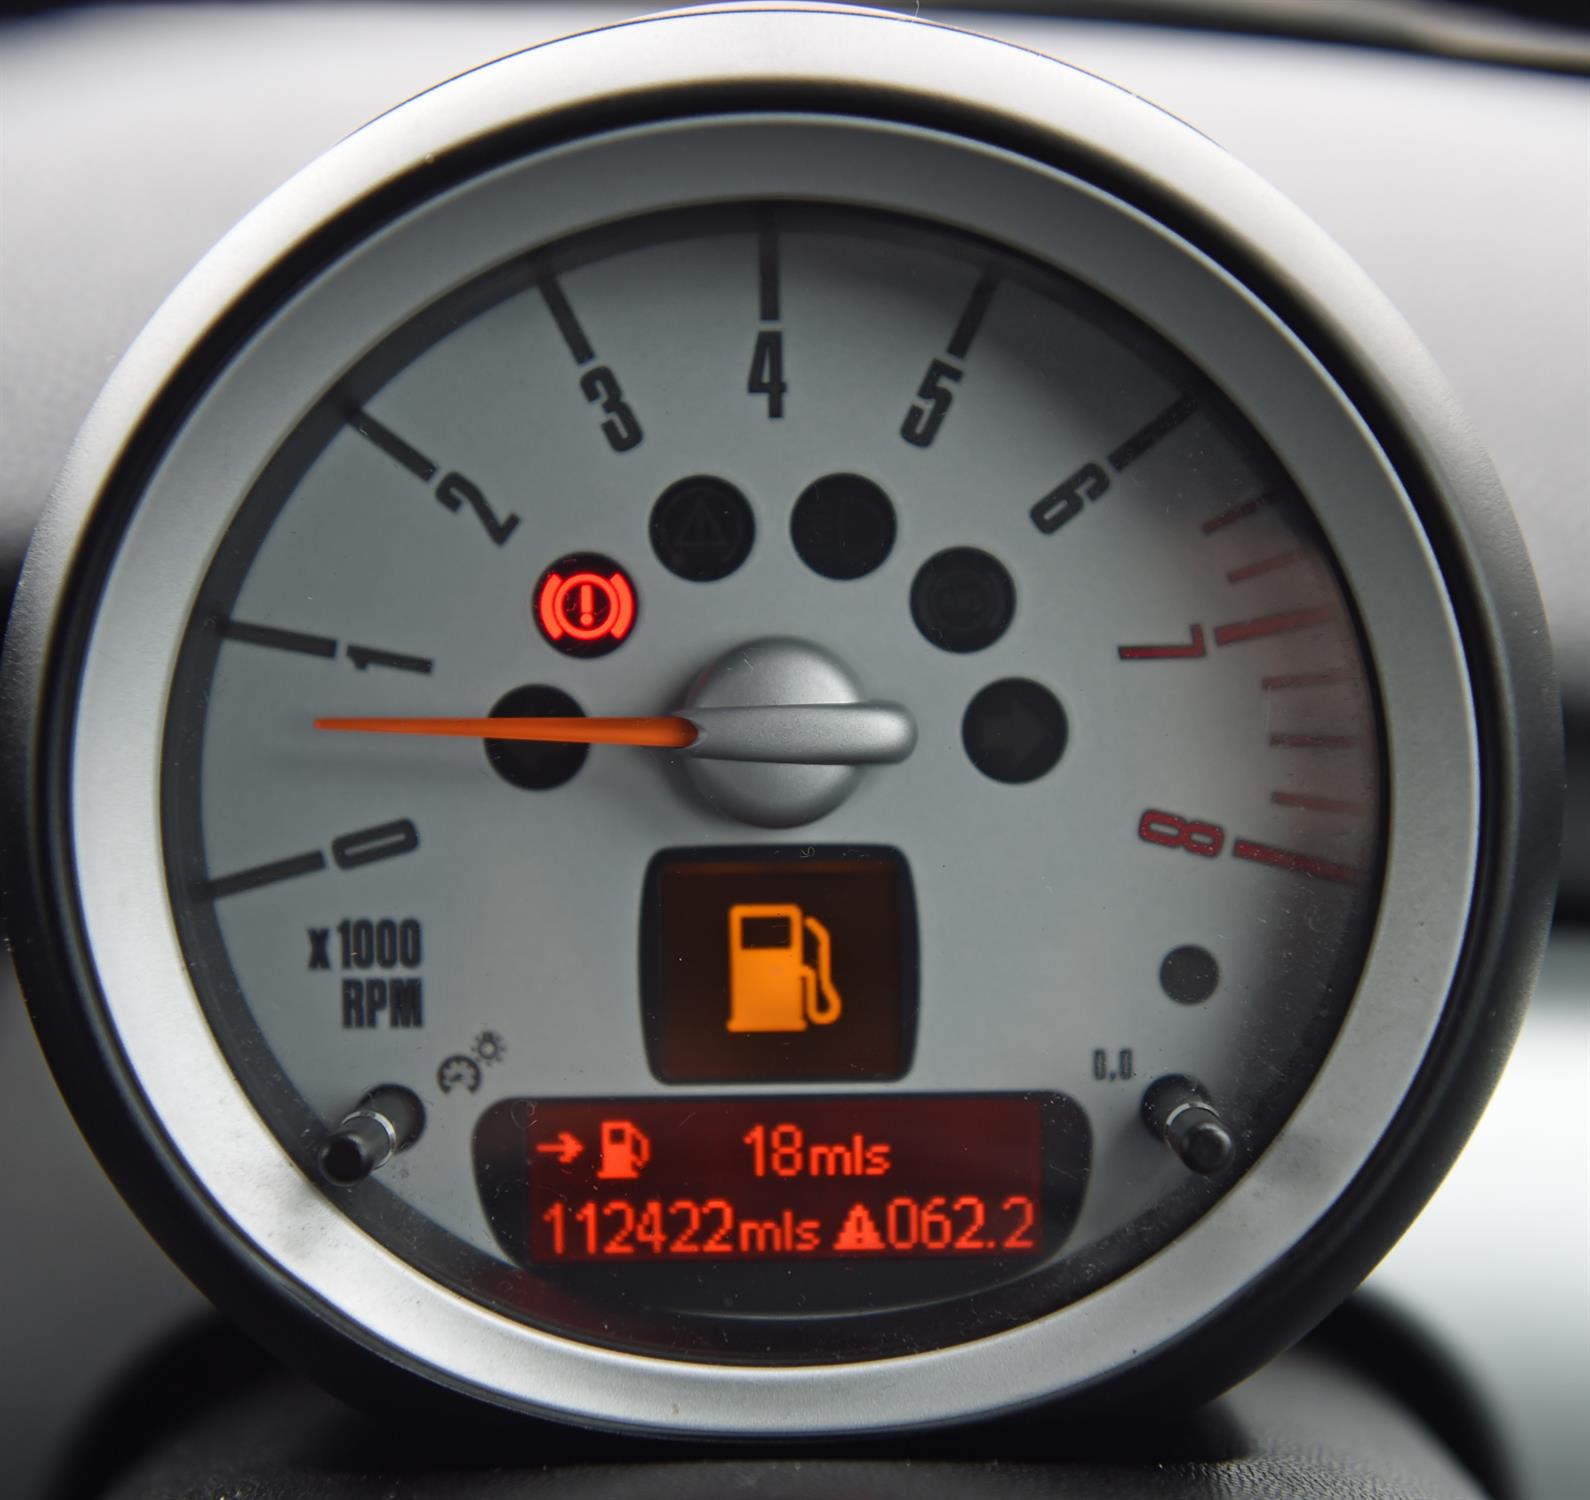 2007 Mini Cooper 1.6 petrol 6 speed manual. Registration number: OW07 CVV. Mileage: 112,422. - Image 6 of 14